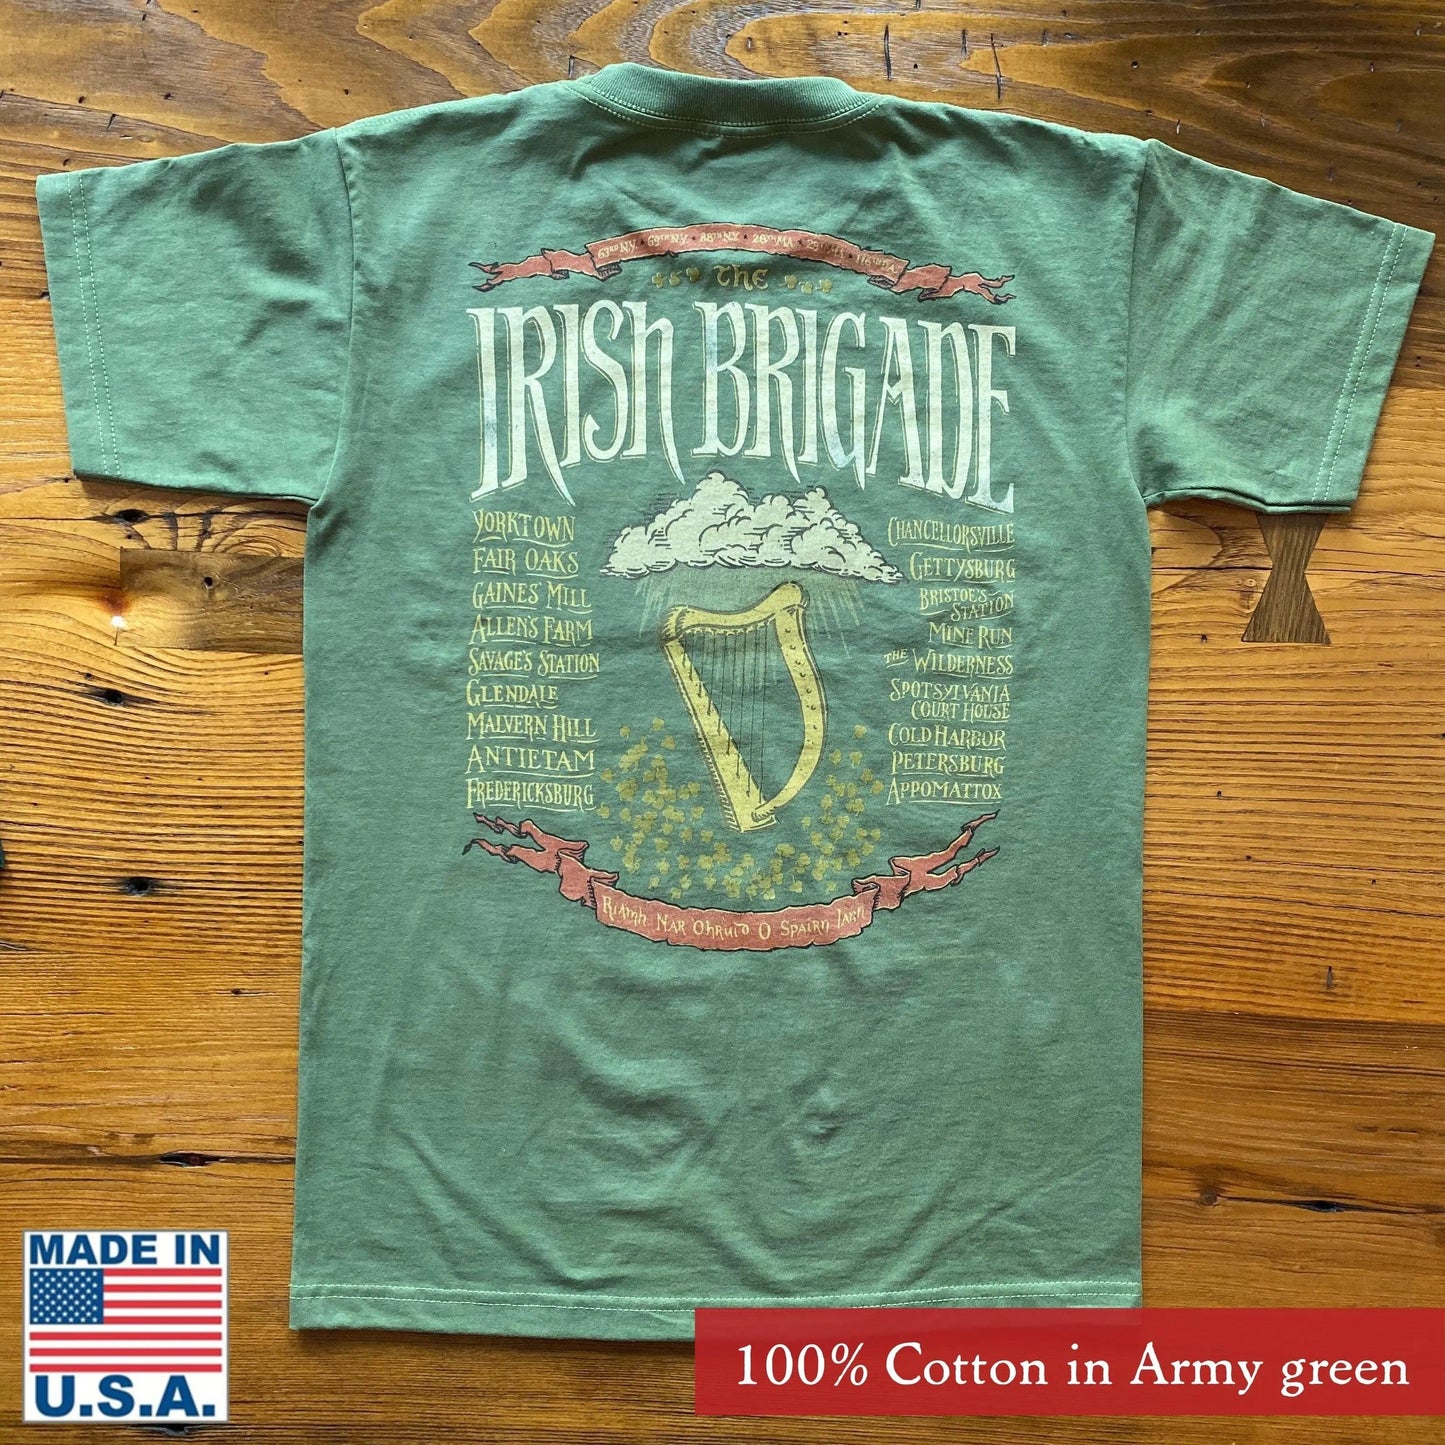 Army green The Civil War "Irish Brigade" Shirt from The History List store